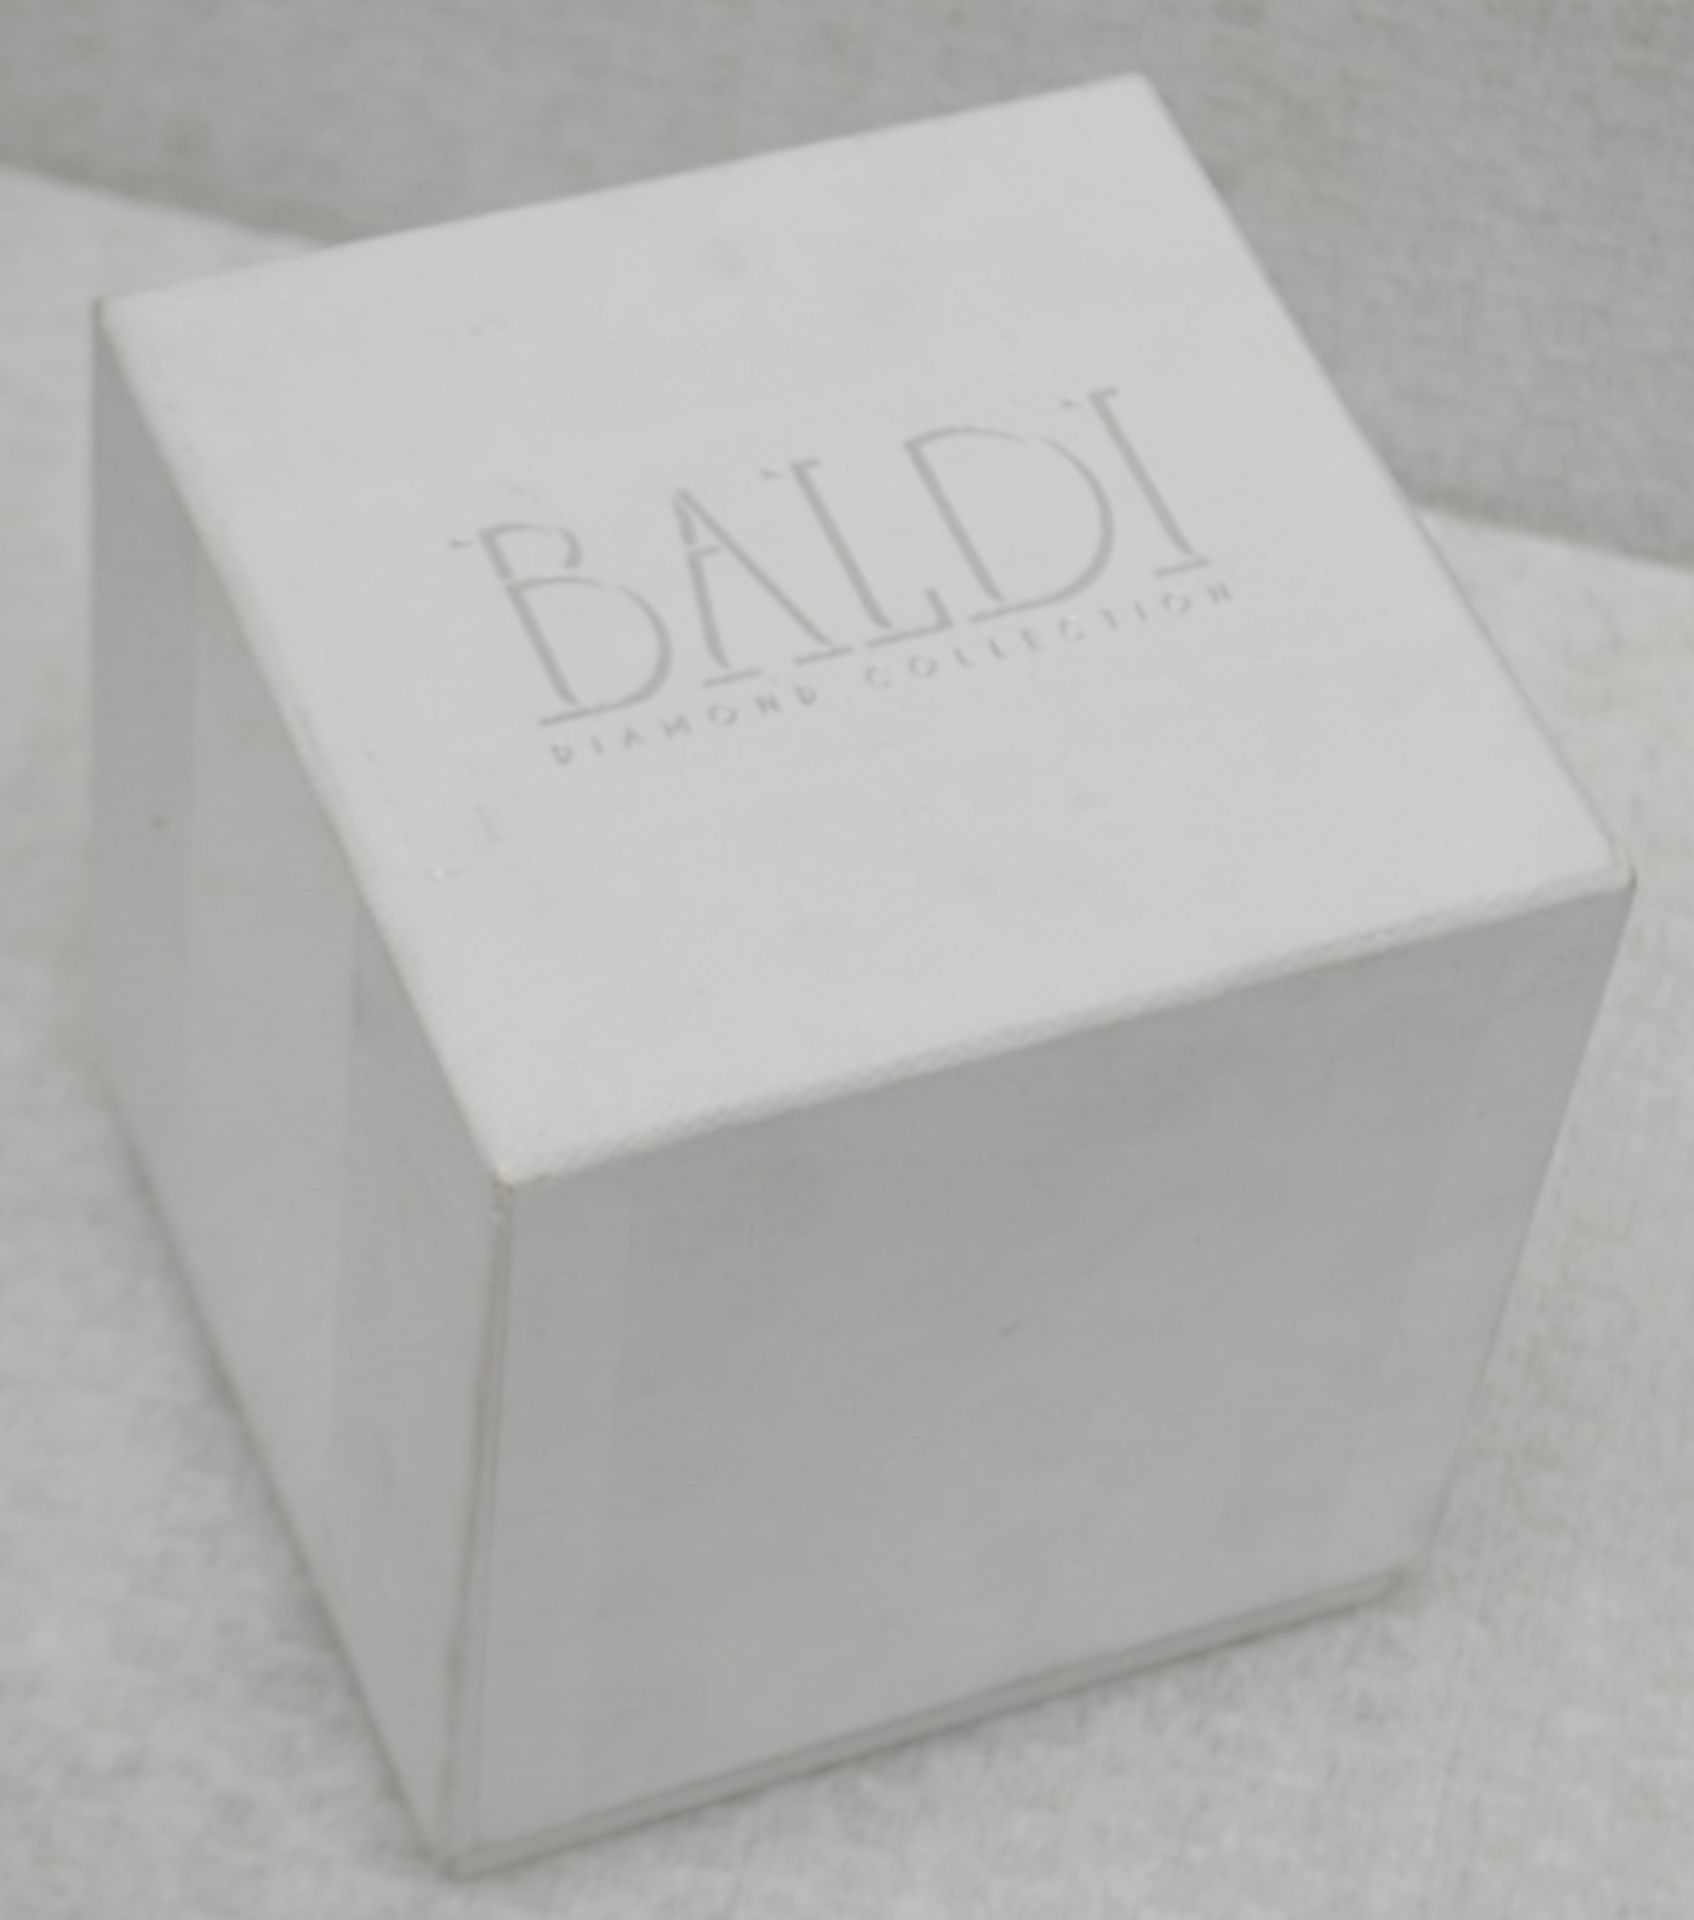 1 x BALDI 'Home Jewels' Italian Hand-crafted Artisan Clear Diamond Crystal Perfume Box, With A - Image 4 of 5